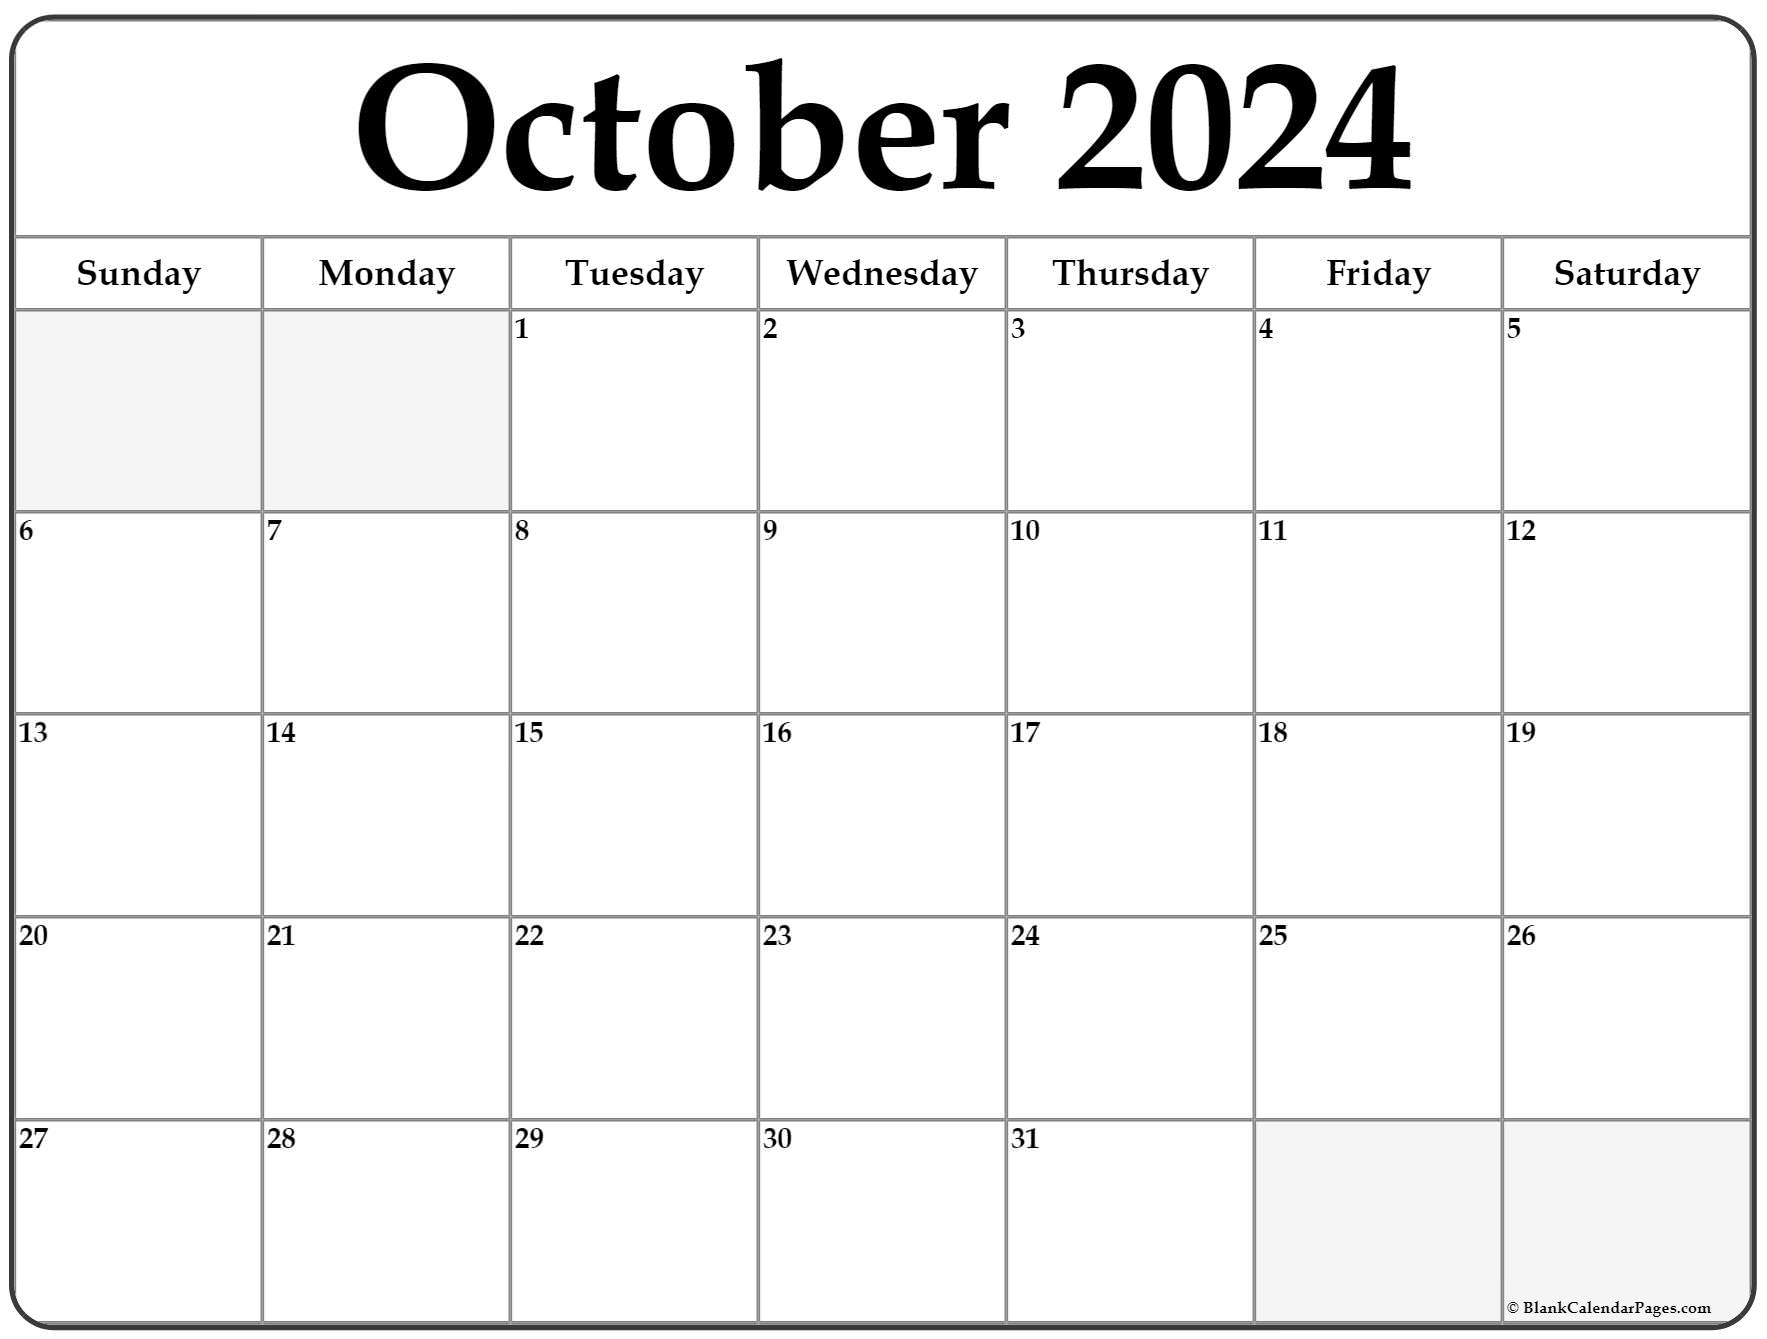 October Calendar Template 2022 October 2022 Calendar | Free Printable Calendar Templates